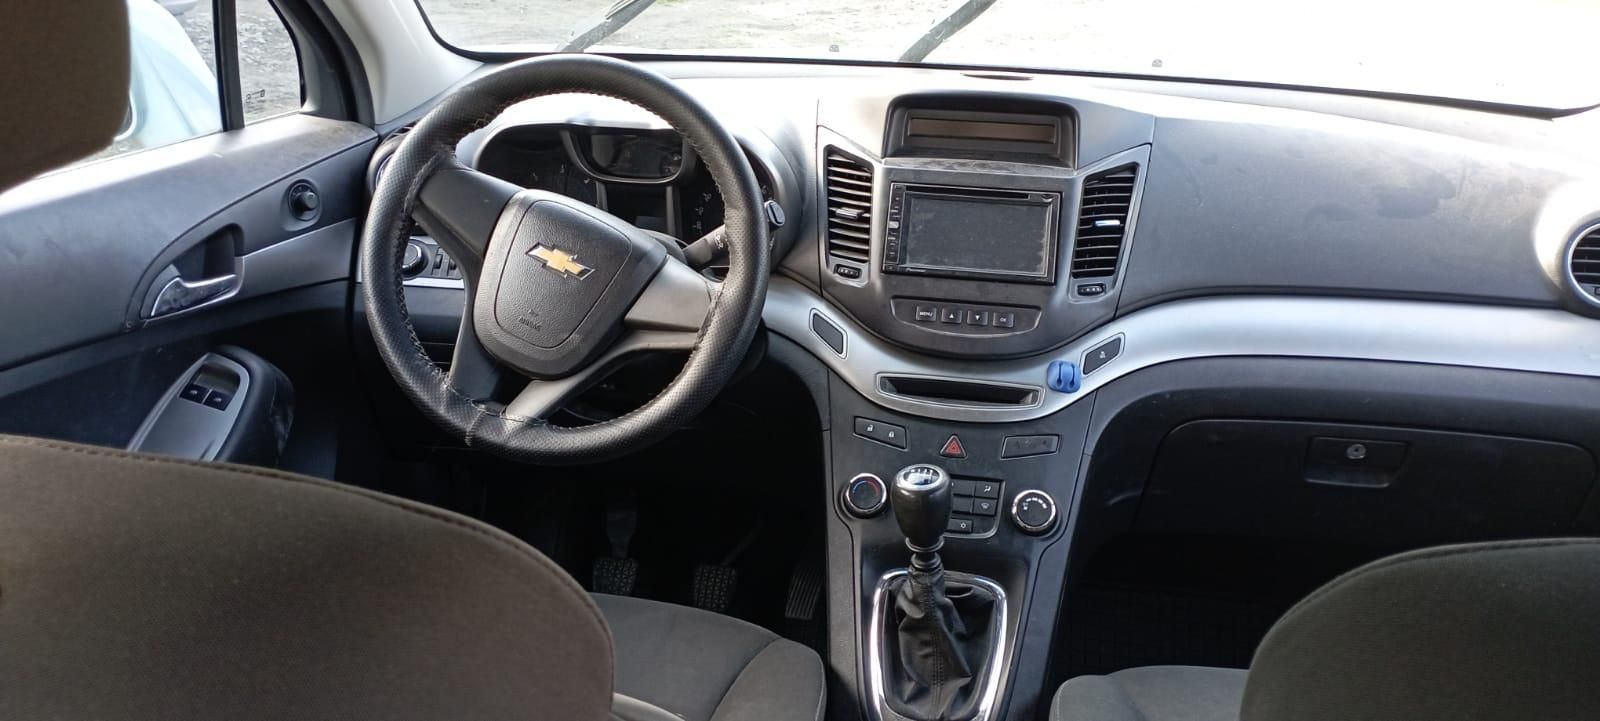 Chevrolet Orlando 2013 avariat negociabil